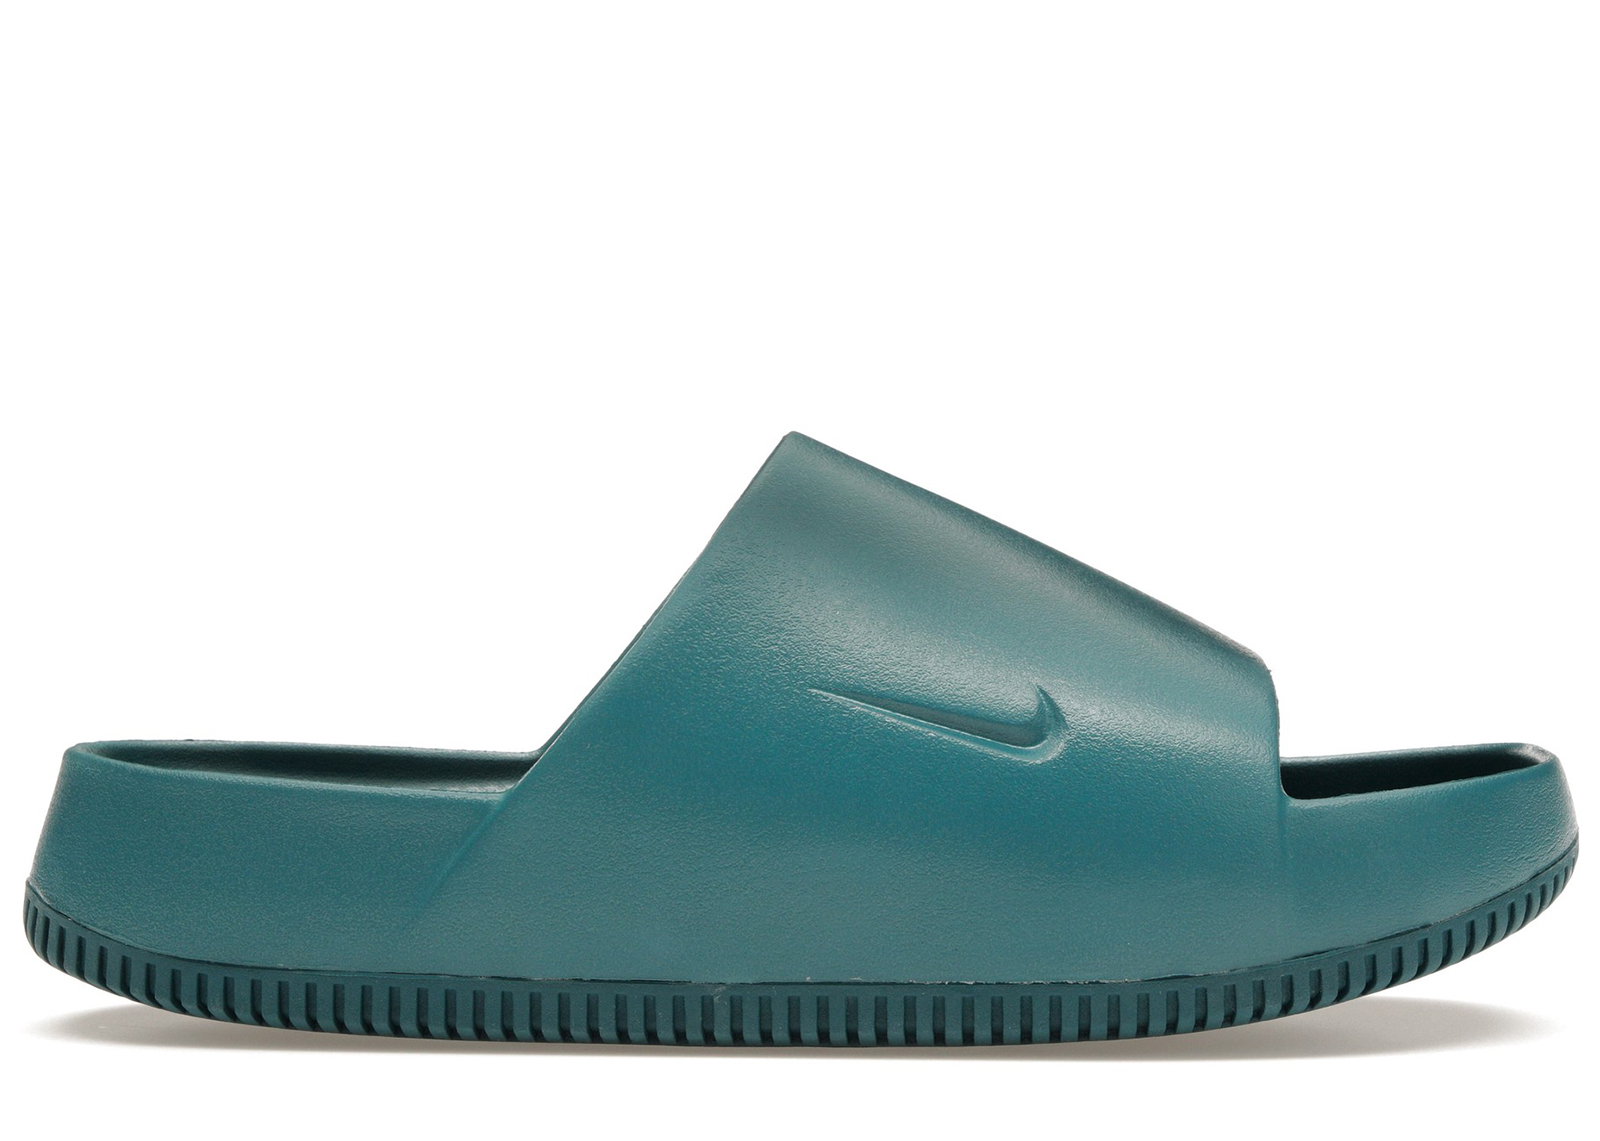 Nike Calm Slide Geode Teal Men's - FD4116-300 - US